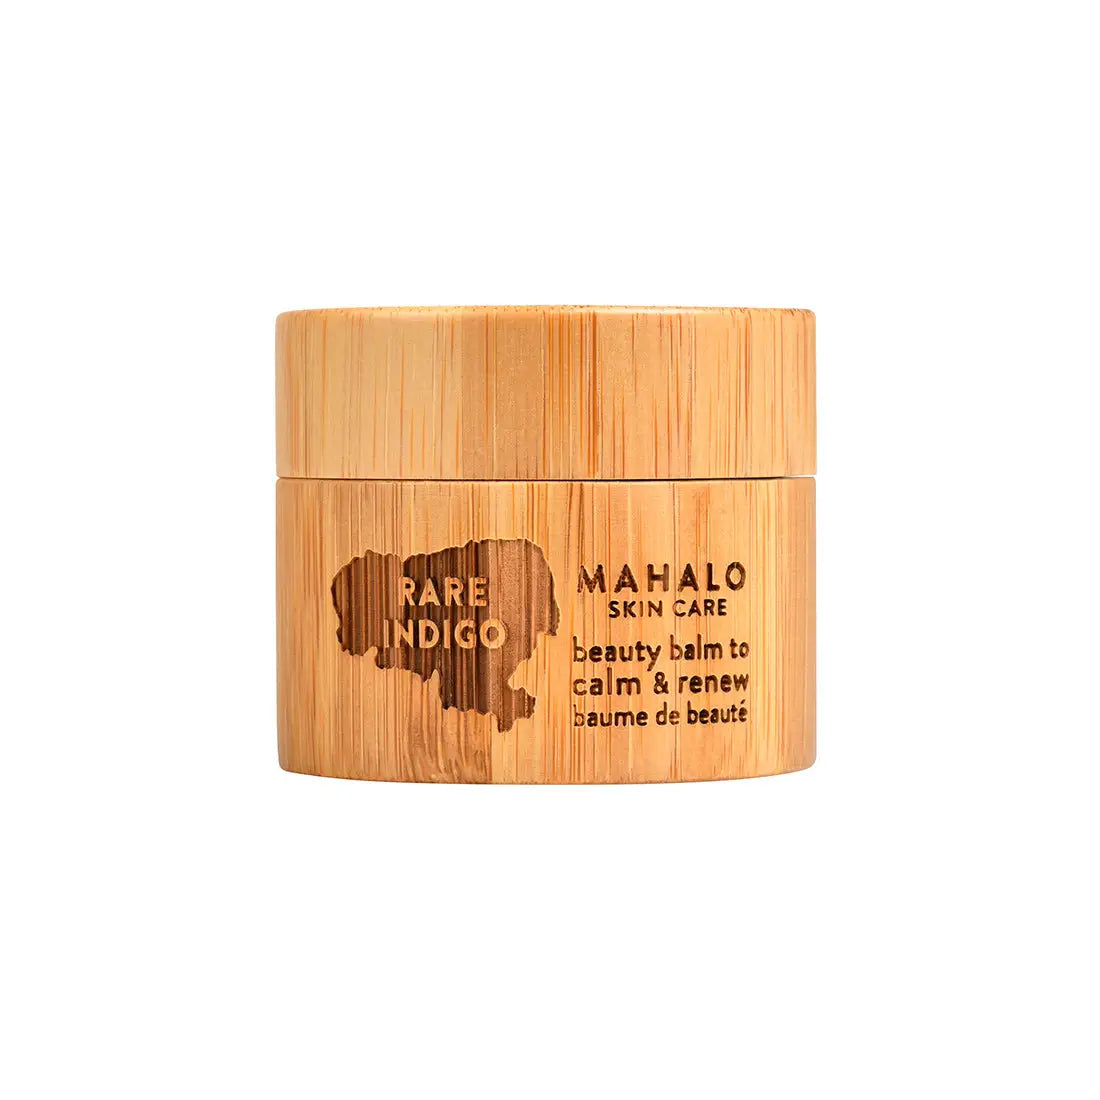 Mahalo Rare Indigo Beauty Balm 30ml - Free Shipping 